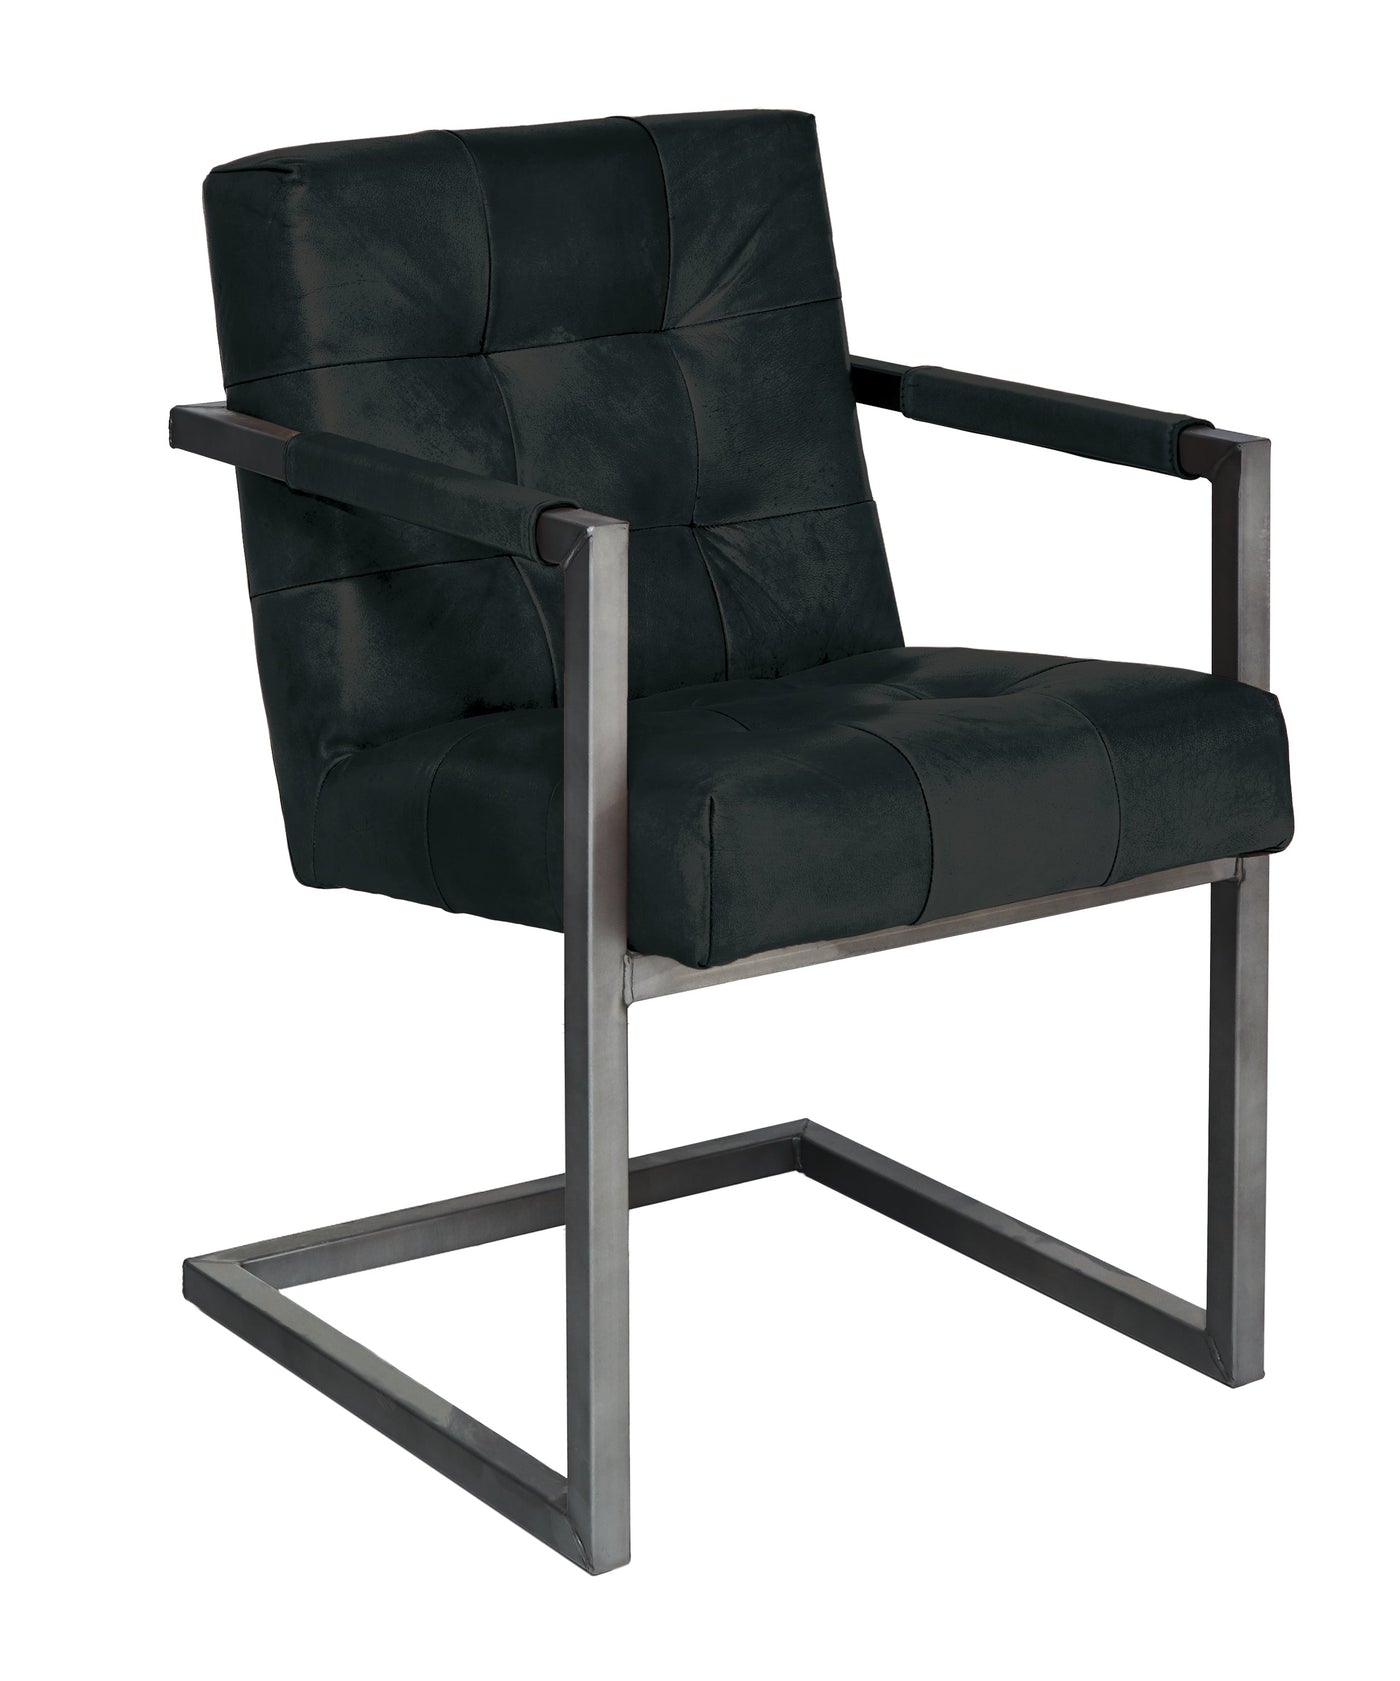 Olli - Stuhl mit Armlehne - Leder Texas Black Washed